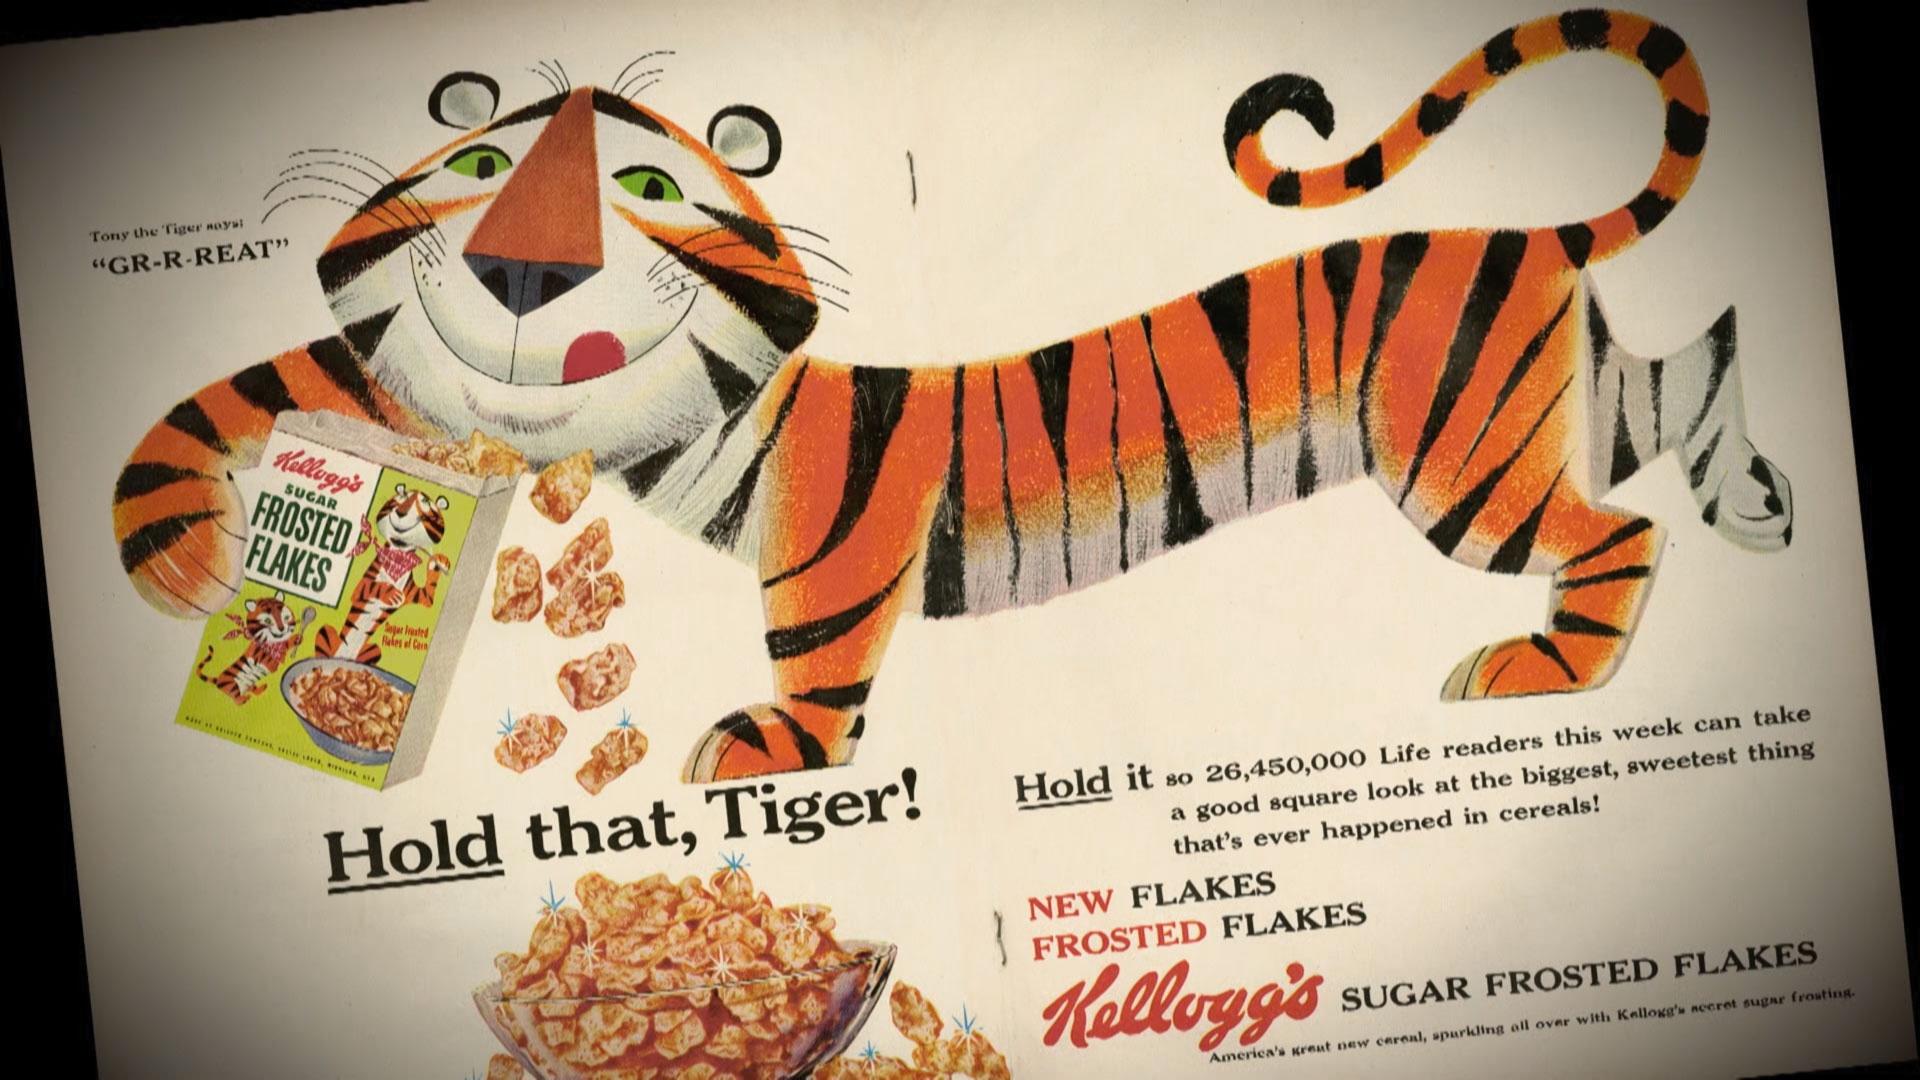 Tony the Tiger vintage print ad